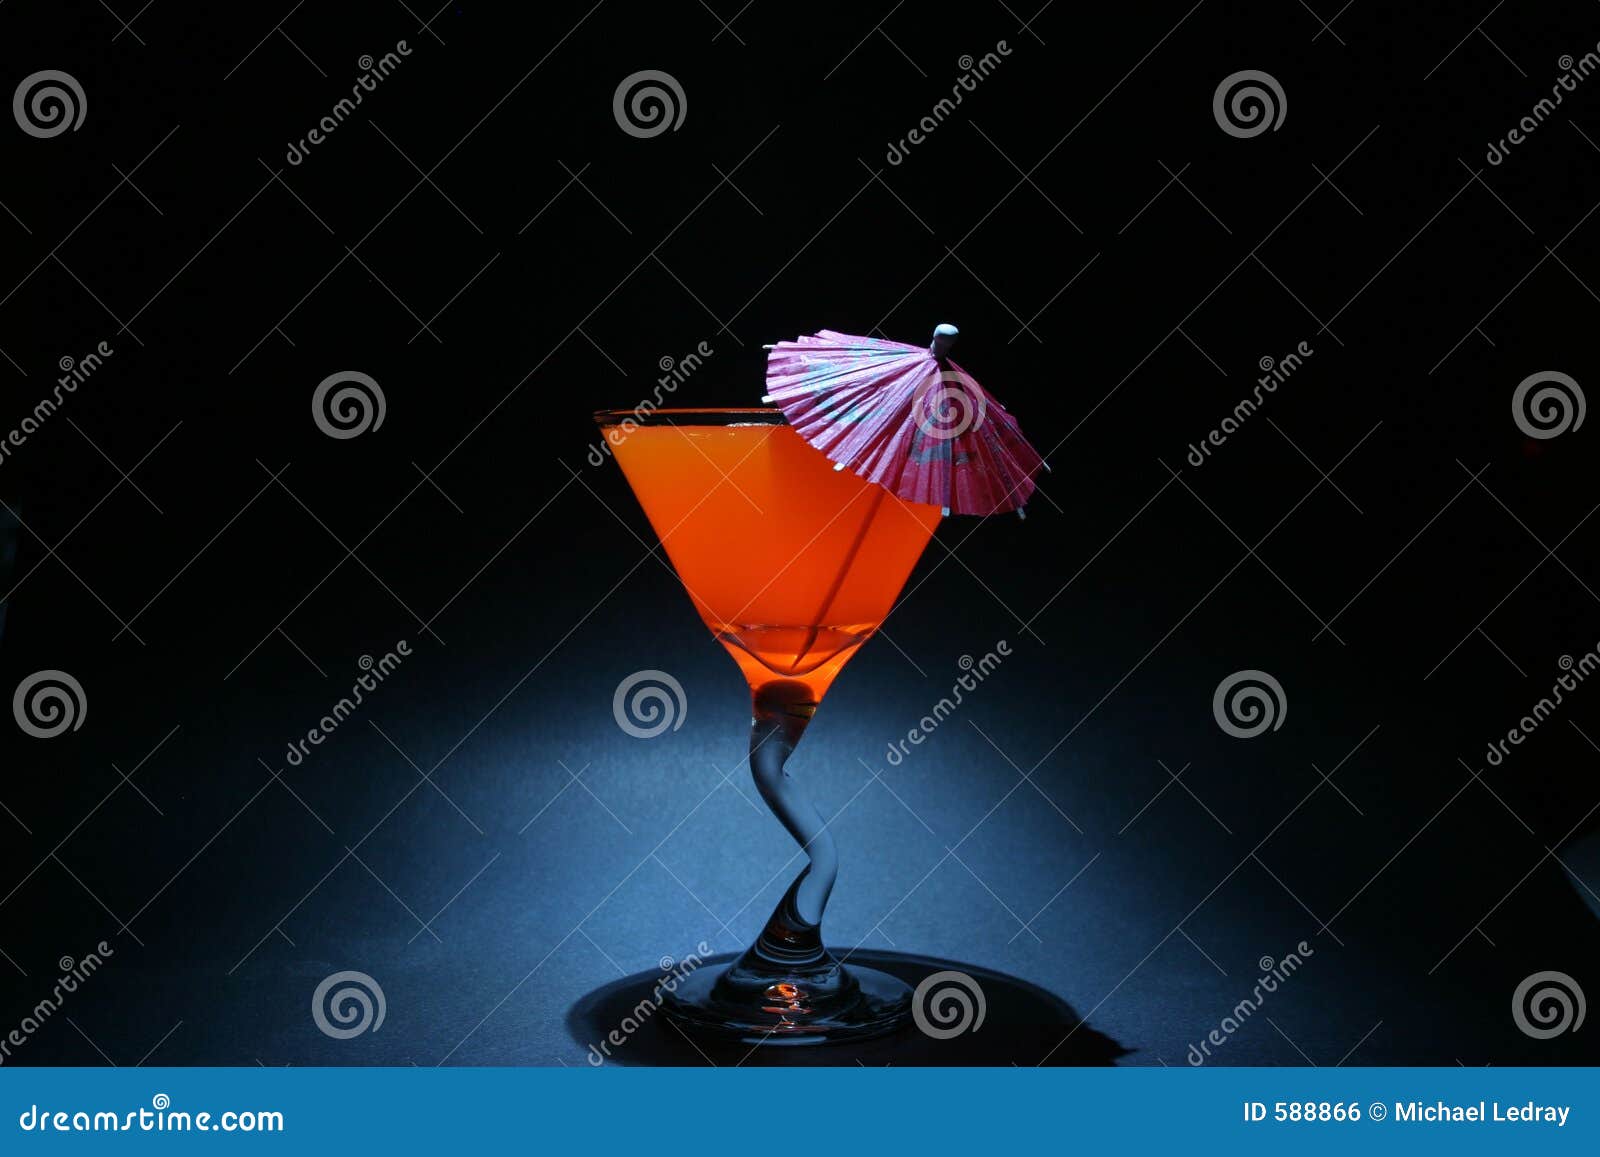 5 second time laps aka bulb exposure of orange liquid in a martini glass